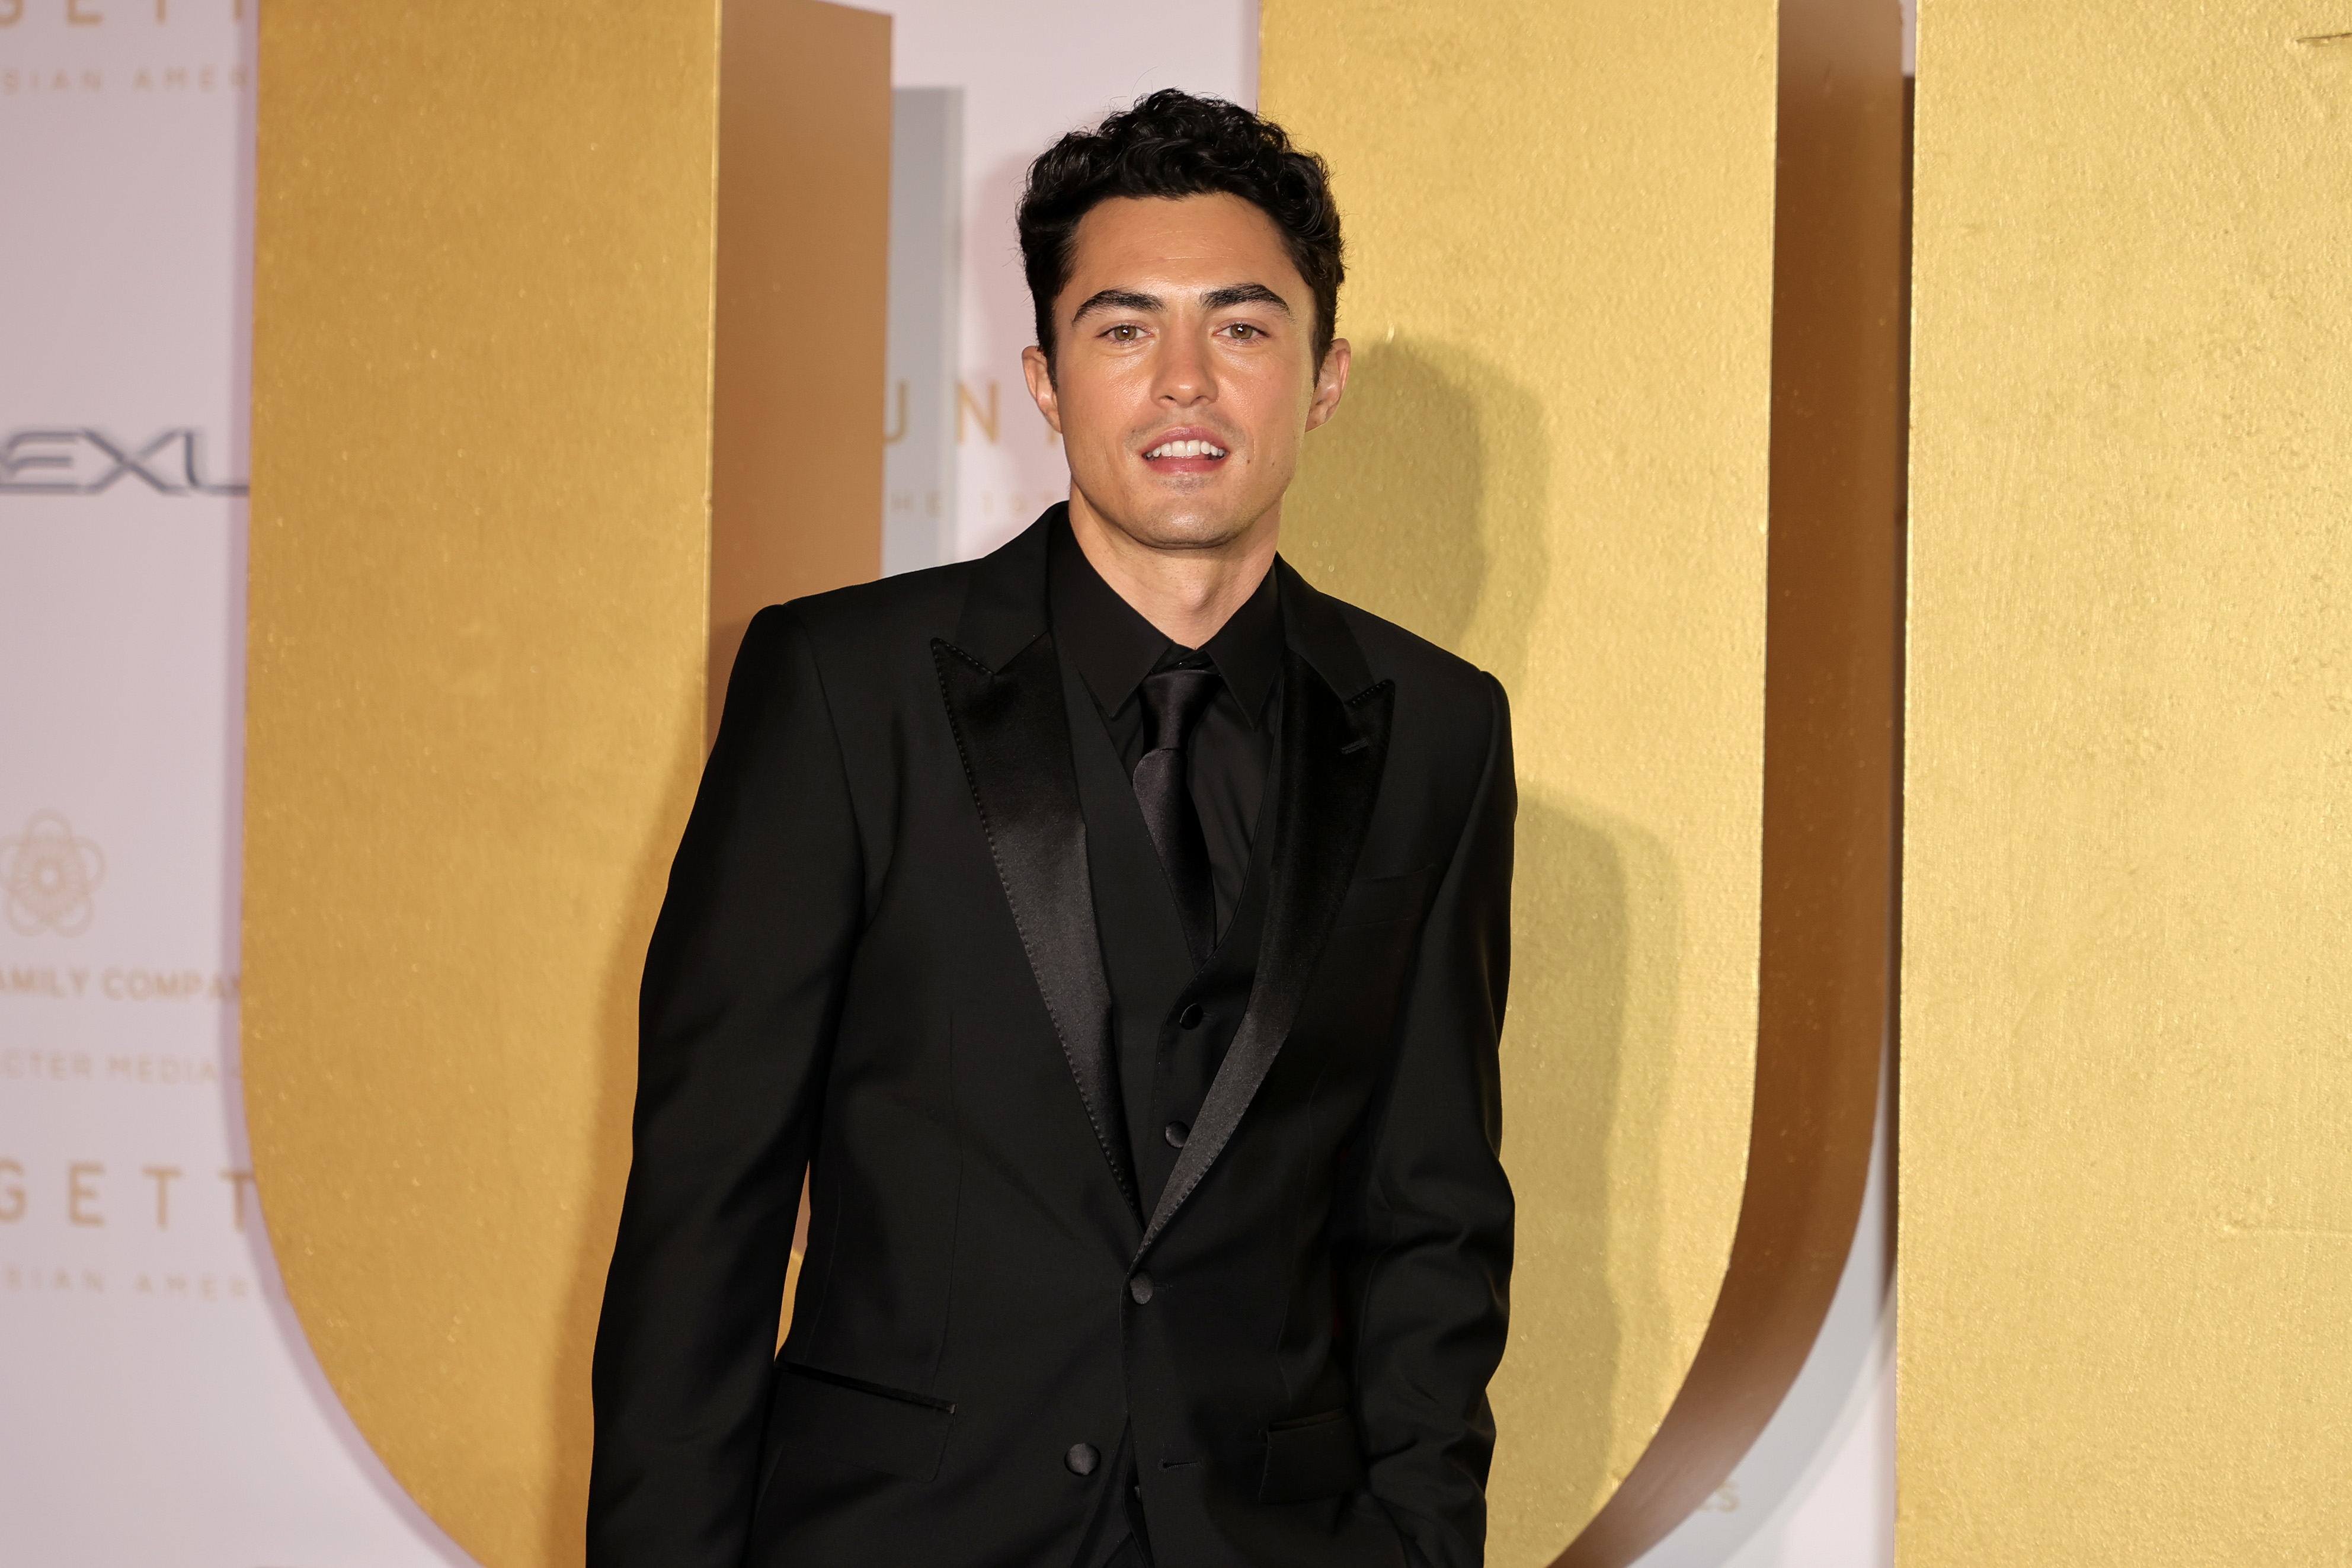 Darren in suit posing in front of a golden backdrop